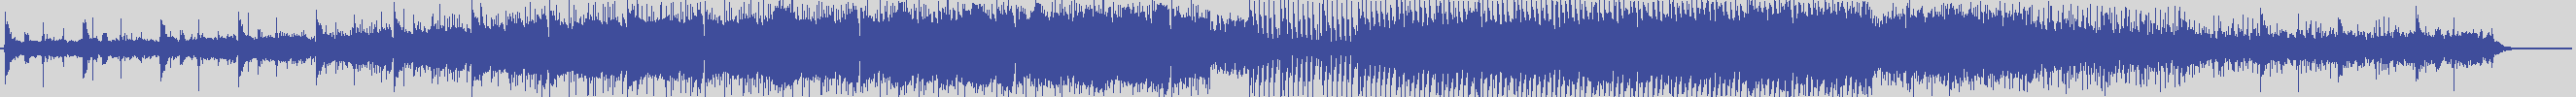 vitti_records [VIT011] Torrens - Anti File [Original Mix] audio wave form